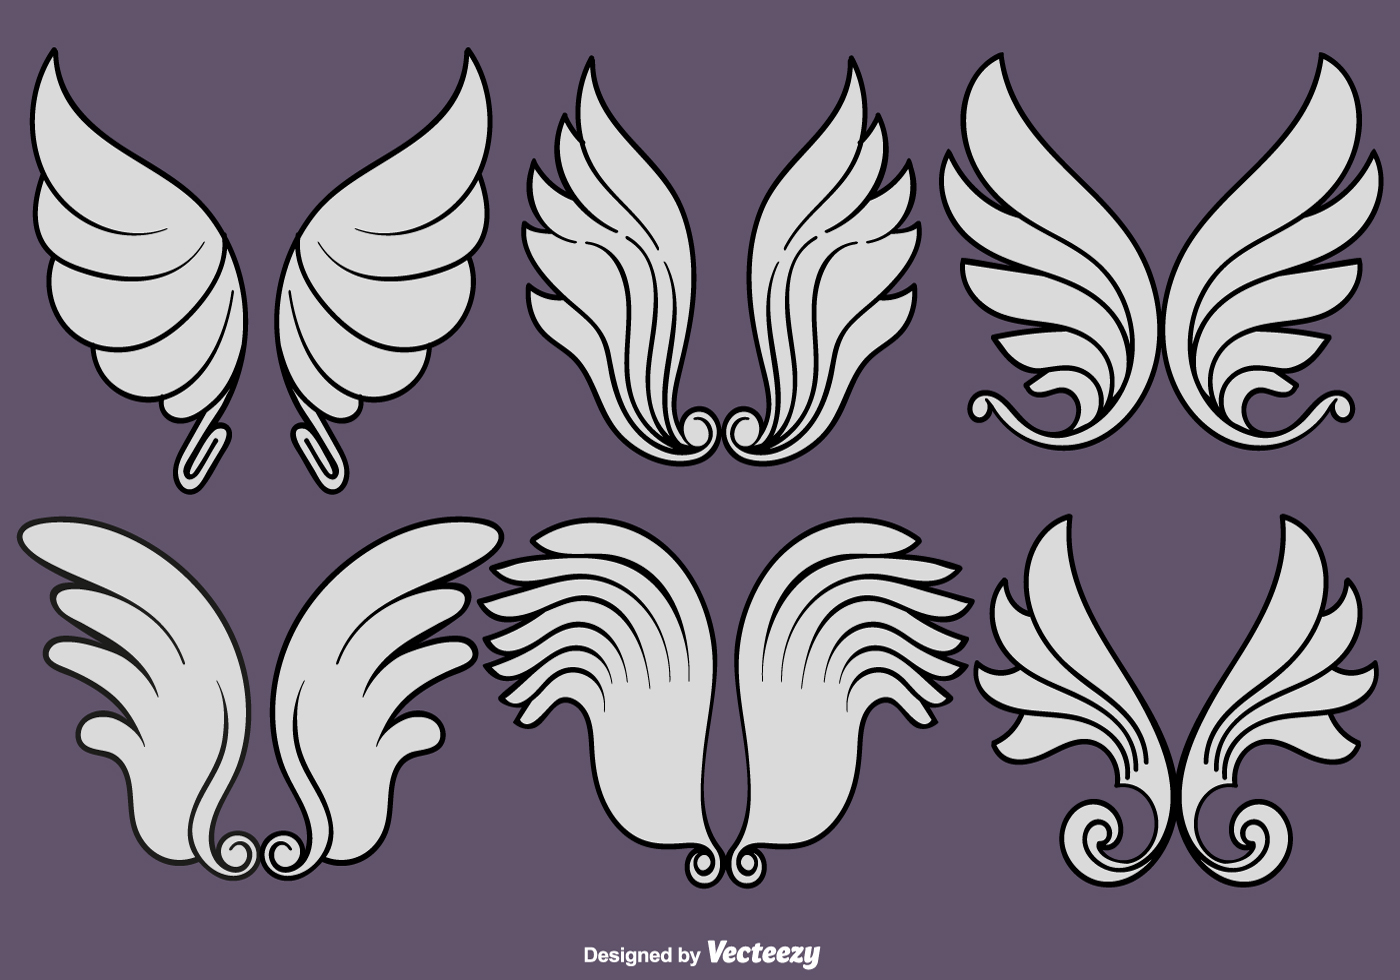 Download Vector Set Of Angel Wings Icons - Download Free Vectors, Clipart Graphics & Vector Art